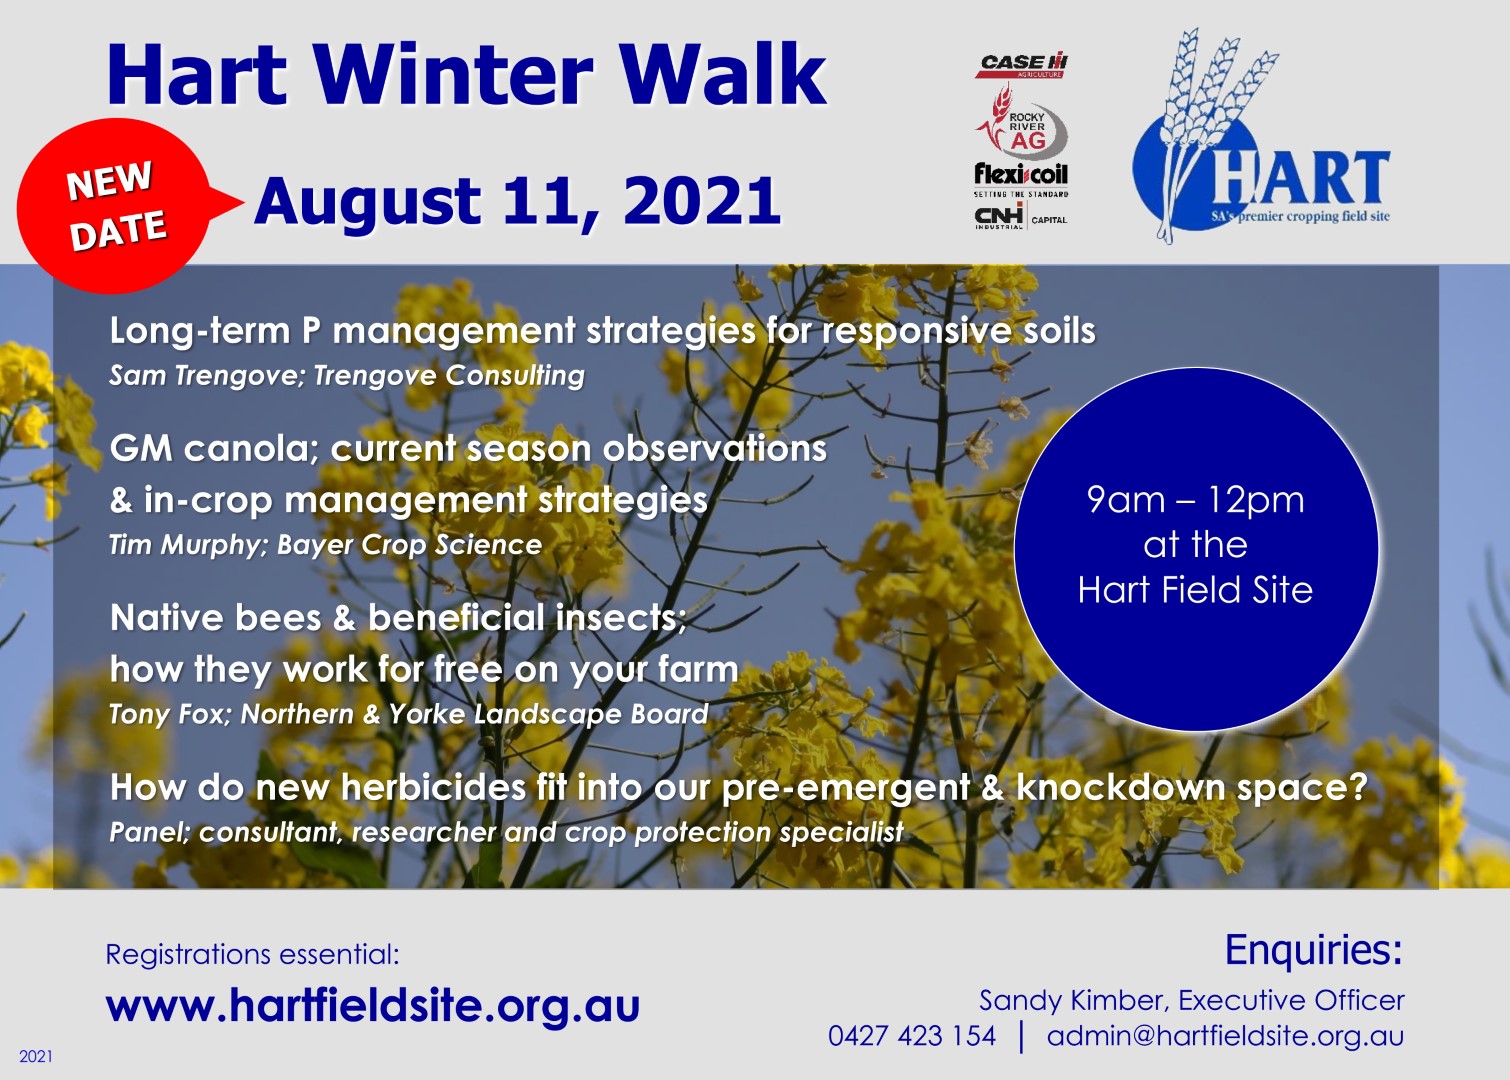 Hart Winter Walk 2021 - NEW DATE